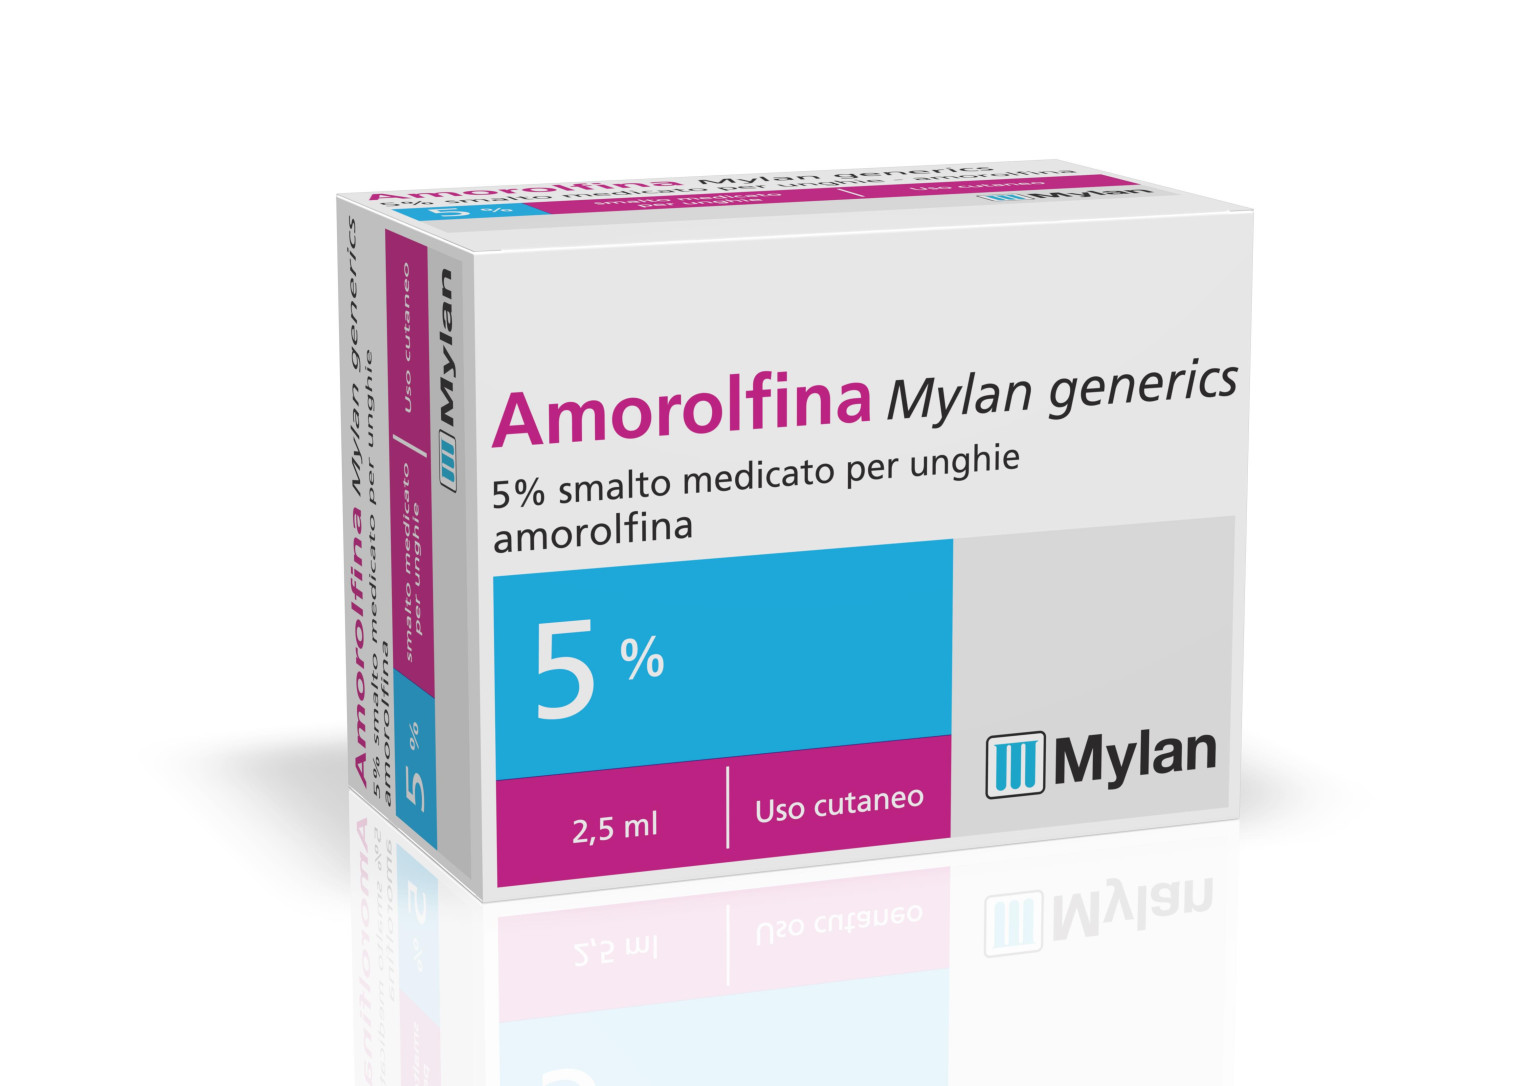 042205017 - Amorolfina 5% Mylan generics Trattamento Unghie 2,5ml - 7858052_2.jpg